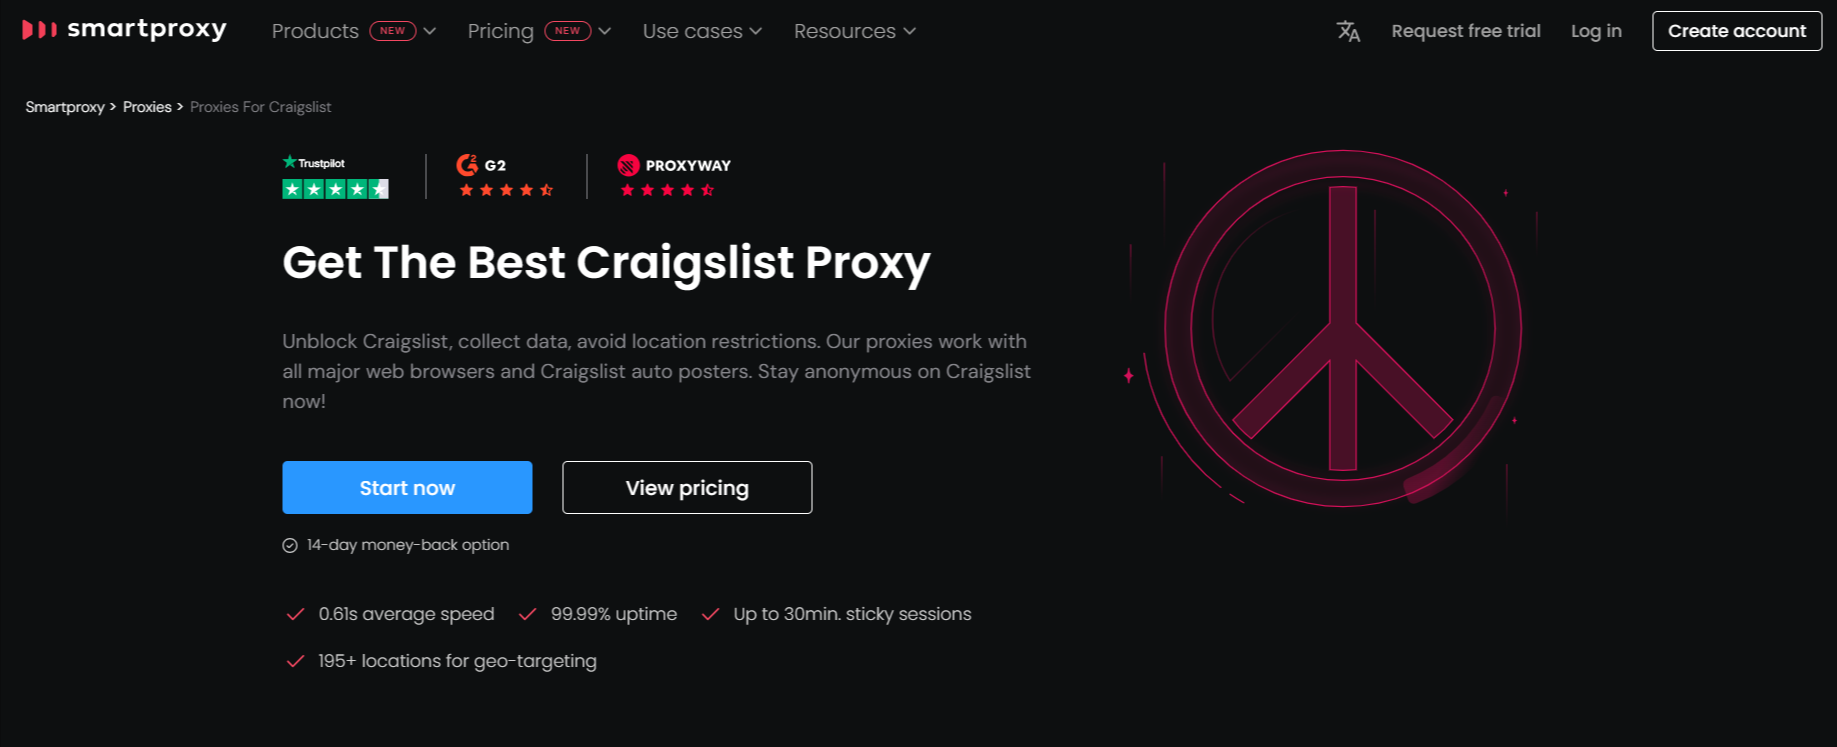 Get-Proxies-for-Craigslist-Smartproxy